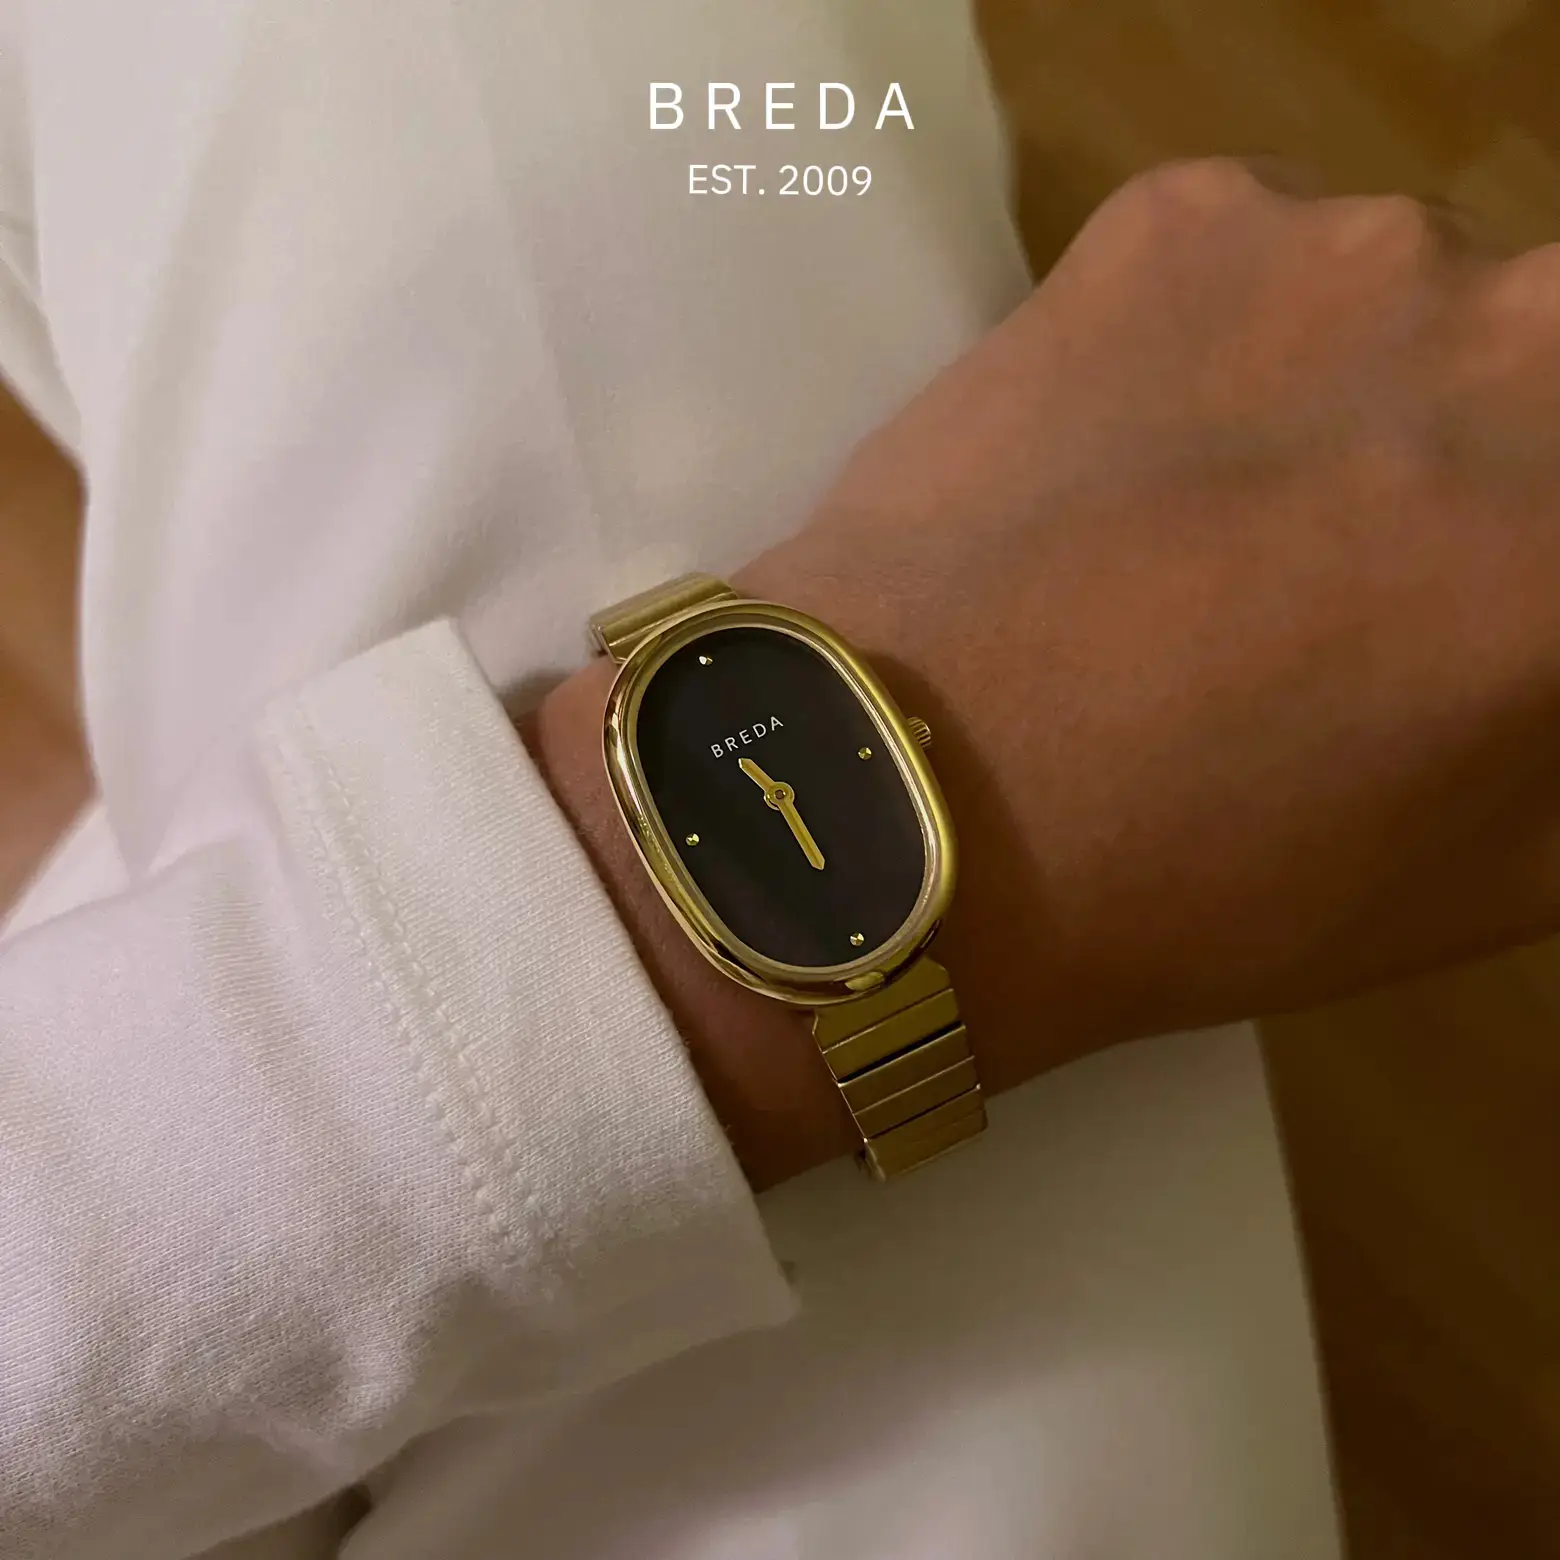 B R E D Aブランド腕時計 | bbytoey が投稿したフォトブック | Lemon8